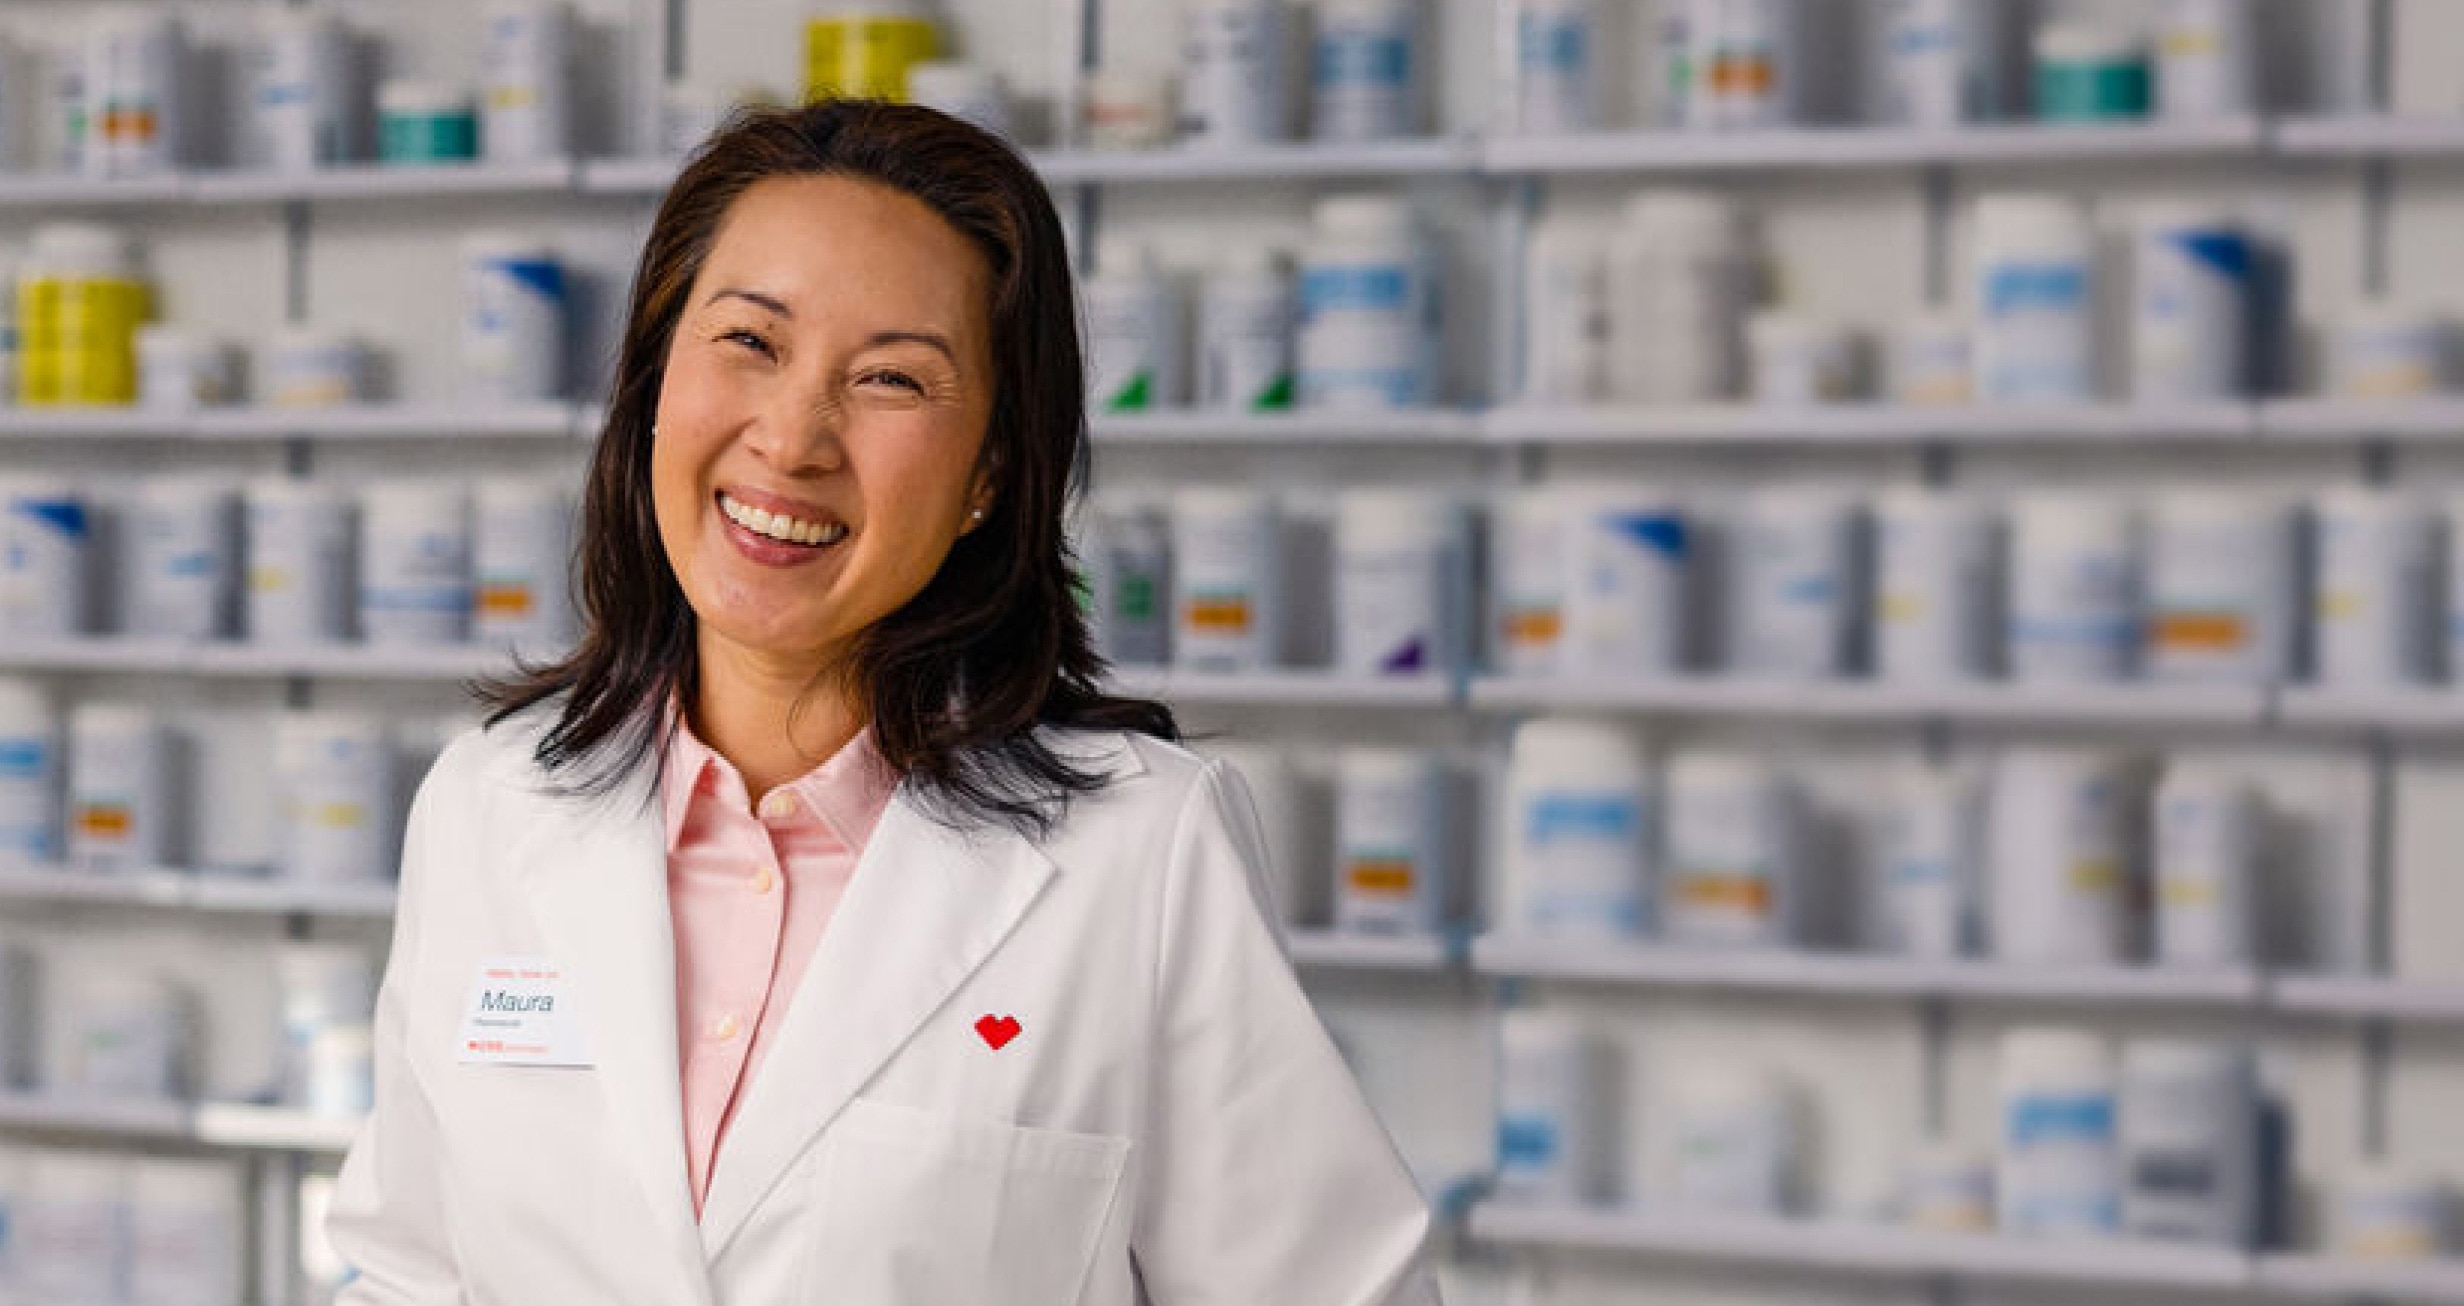 A smiling CVS pharmacist waits at the prescription counter.